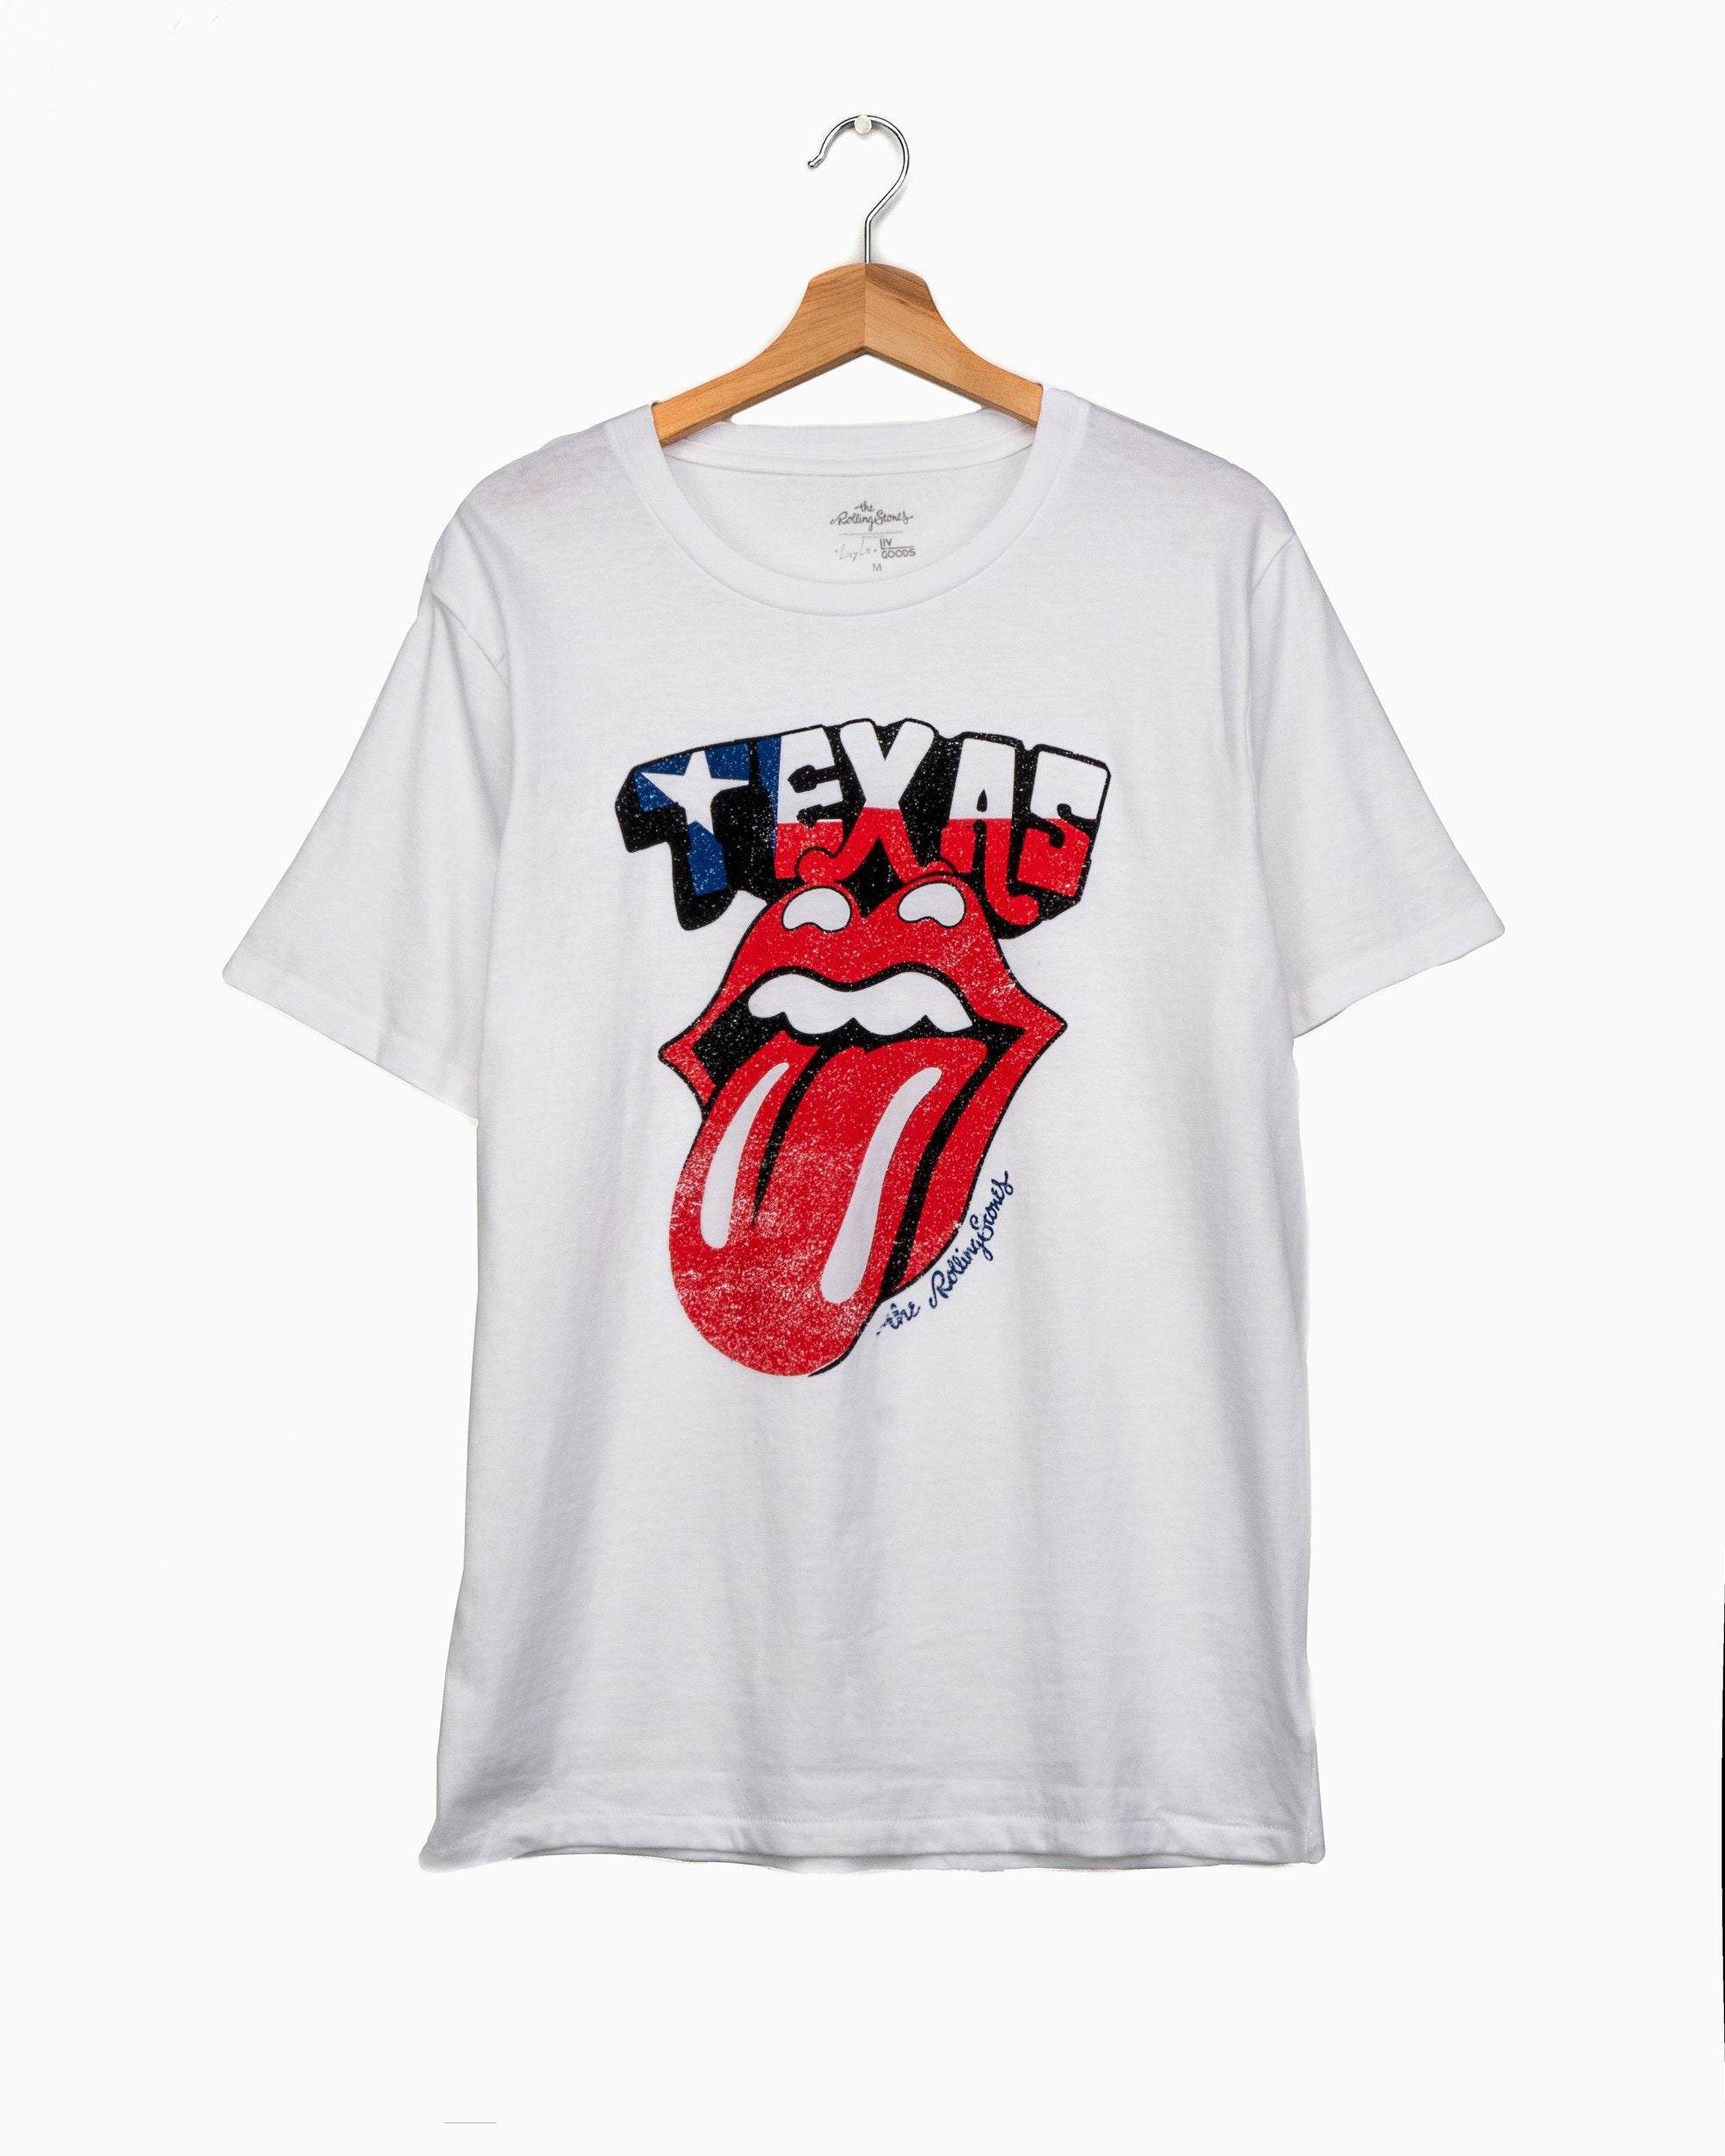 Rolling Stones Texas Flag Rocker White Tee (4513576124519)